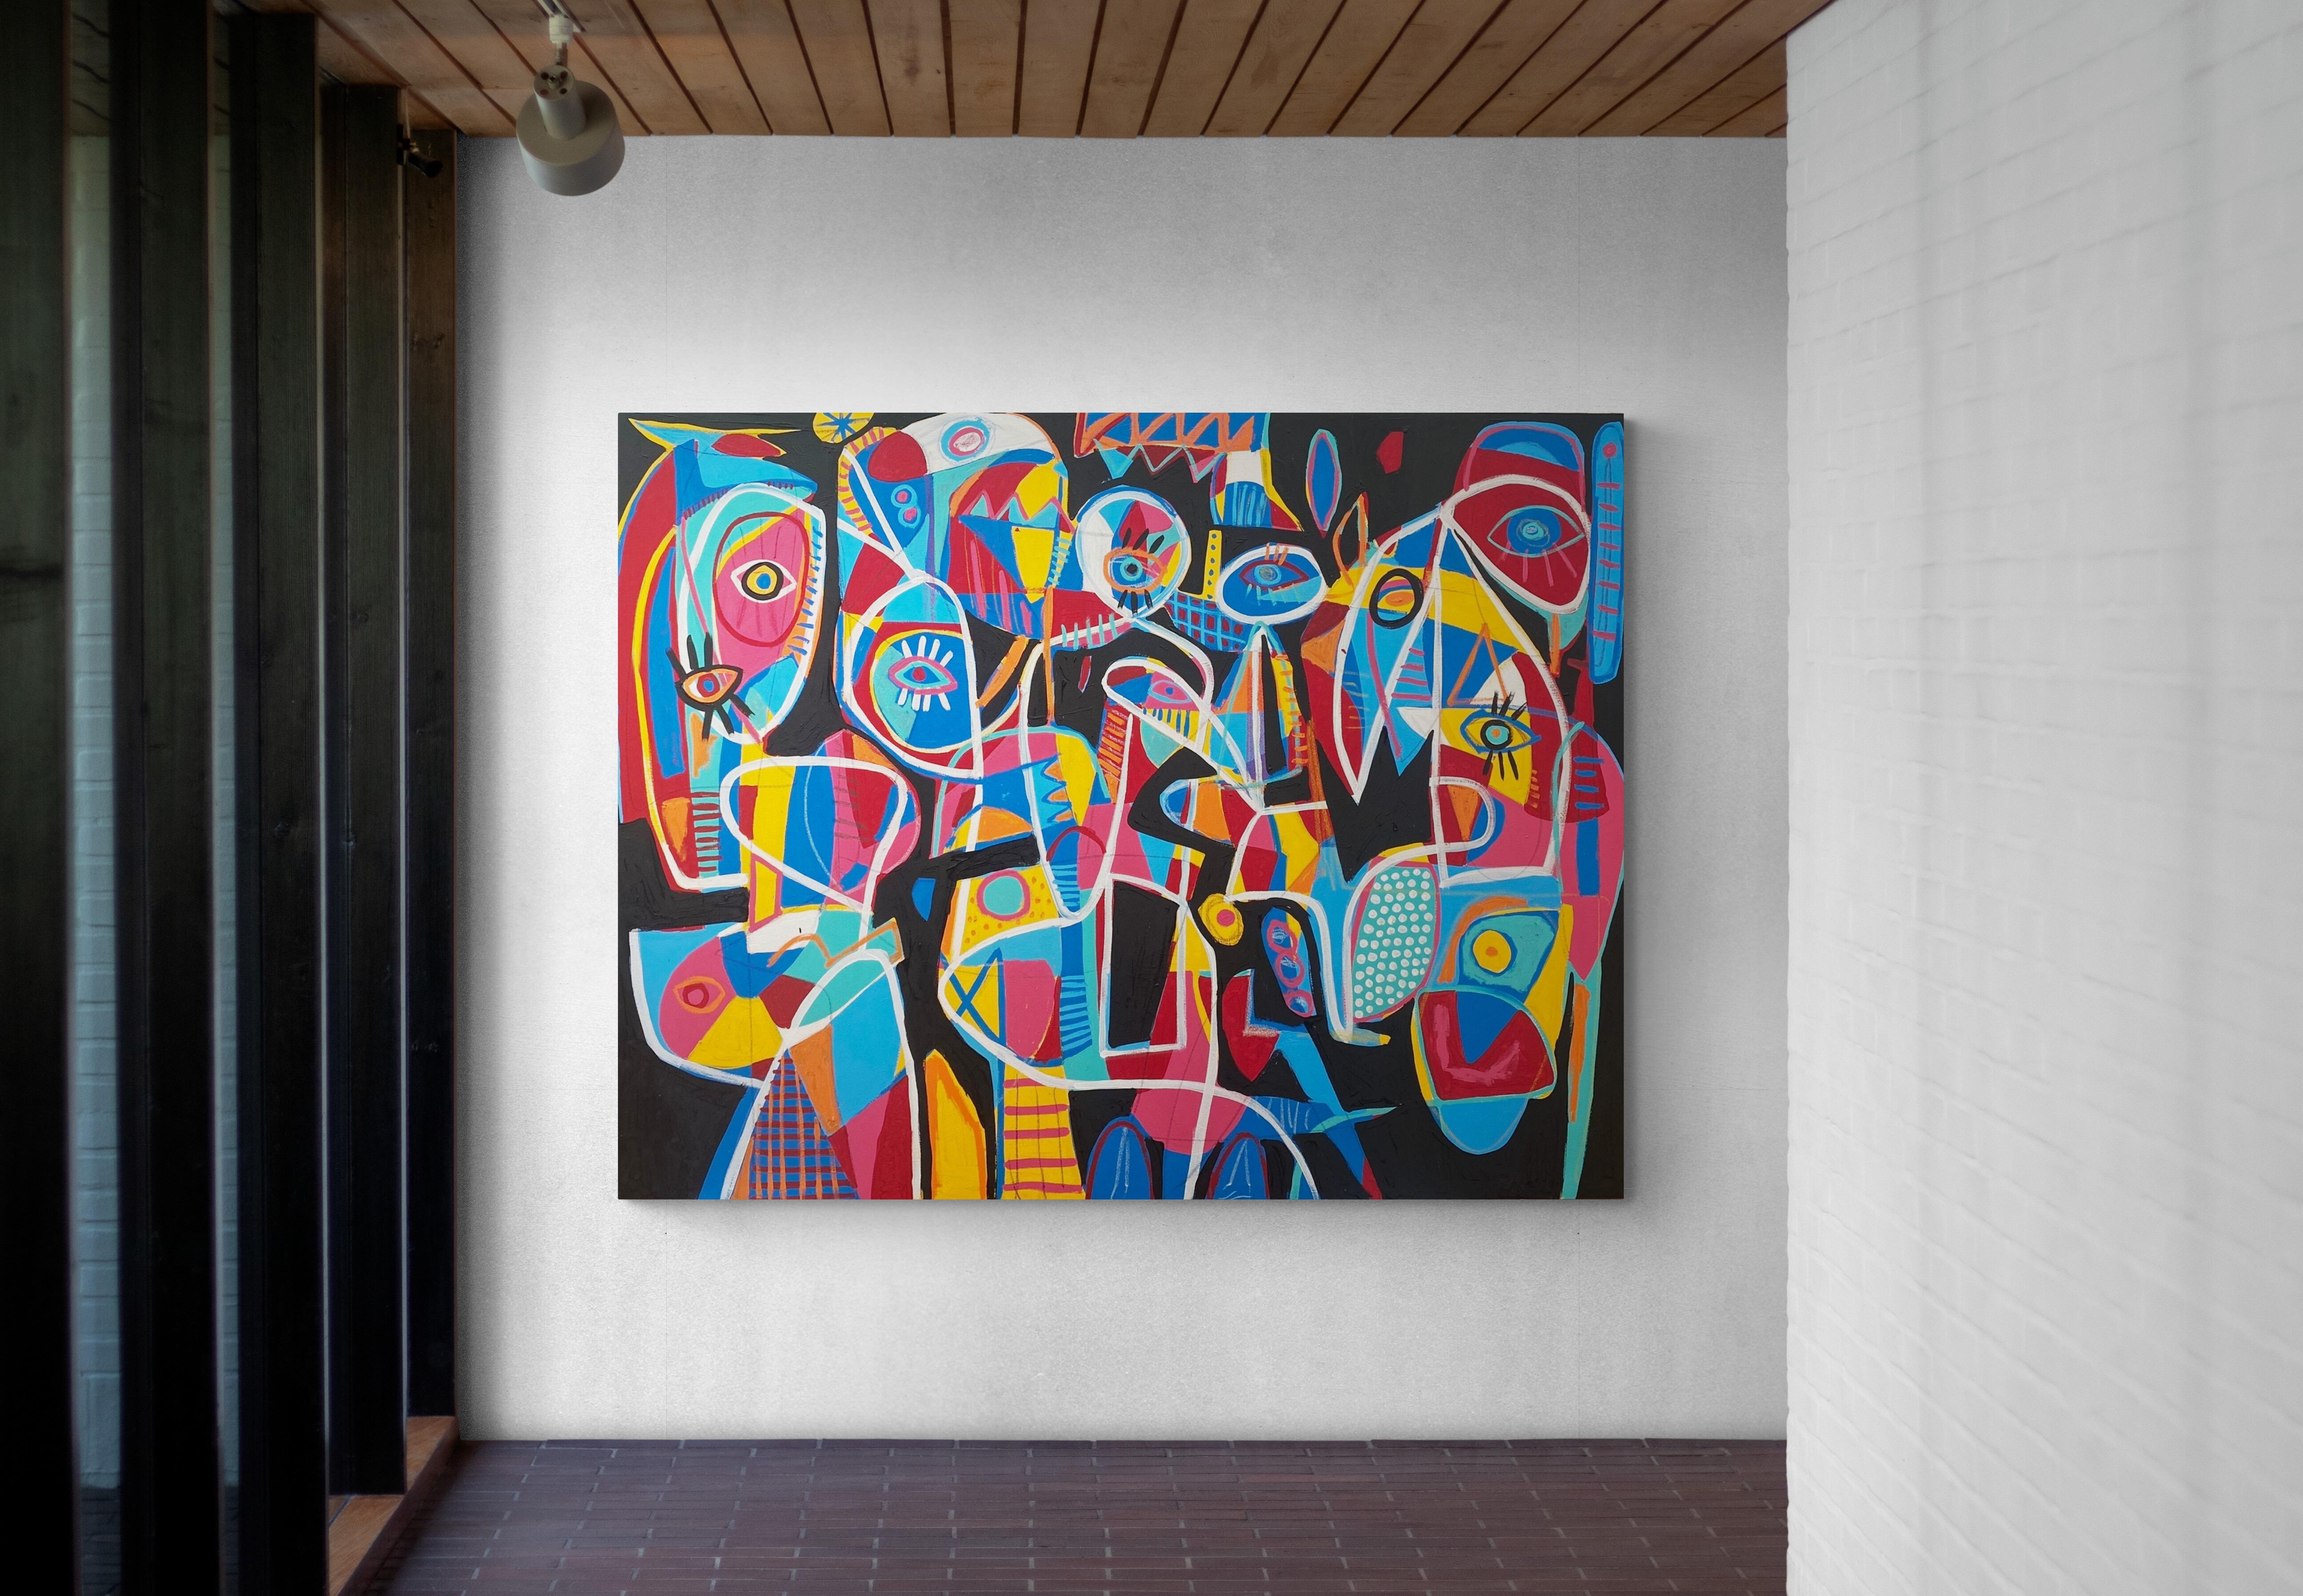 Contemporary Art, Abstract Painting
Acrylic on canvas
130x170cm
Signed 



About the artist
Enrique Pichardo (Mexico City, 1973) graduated from Escuela Nacional de Pintura, Escultura y Grabado (ENPEG) “La Esmeralda”. As a Mexican Contemporary